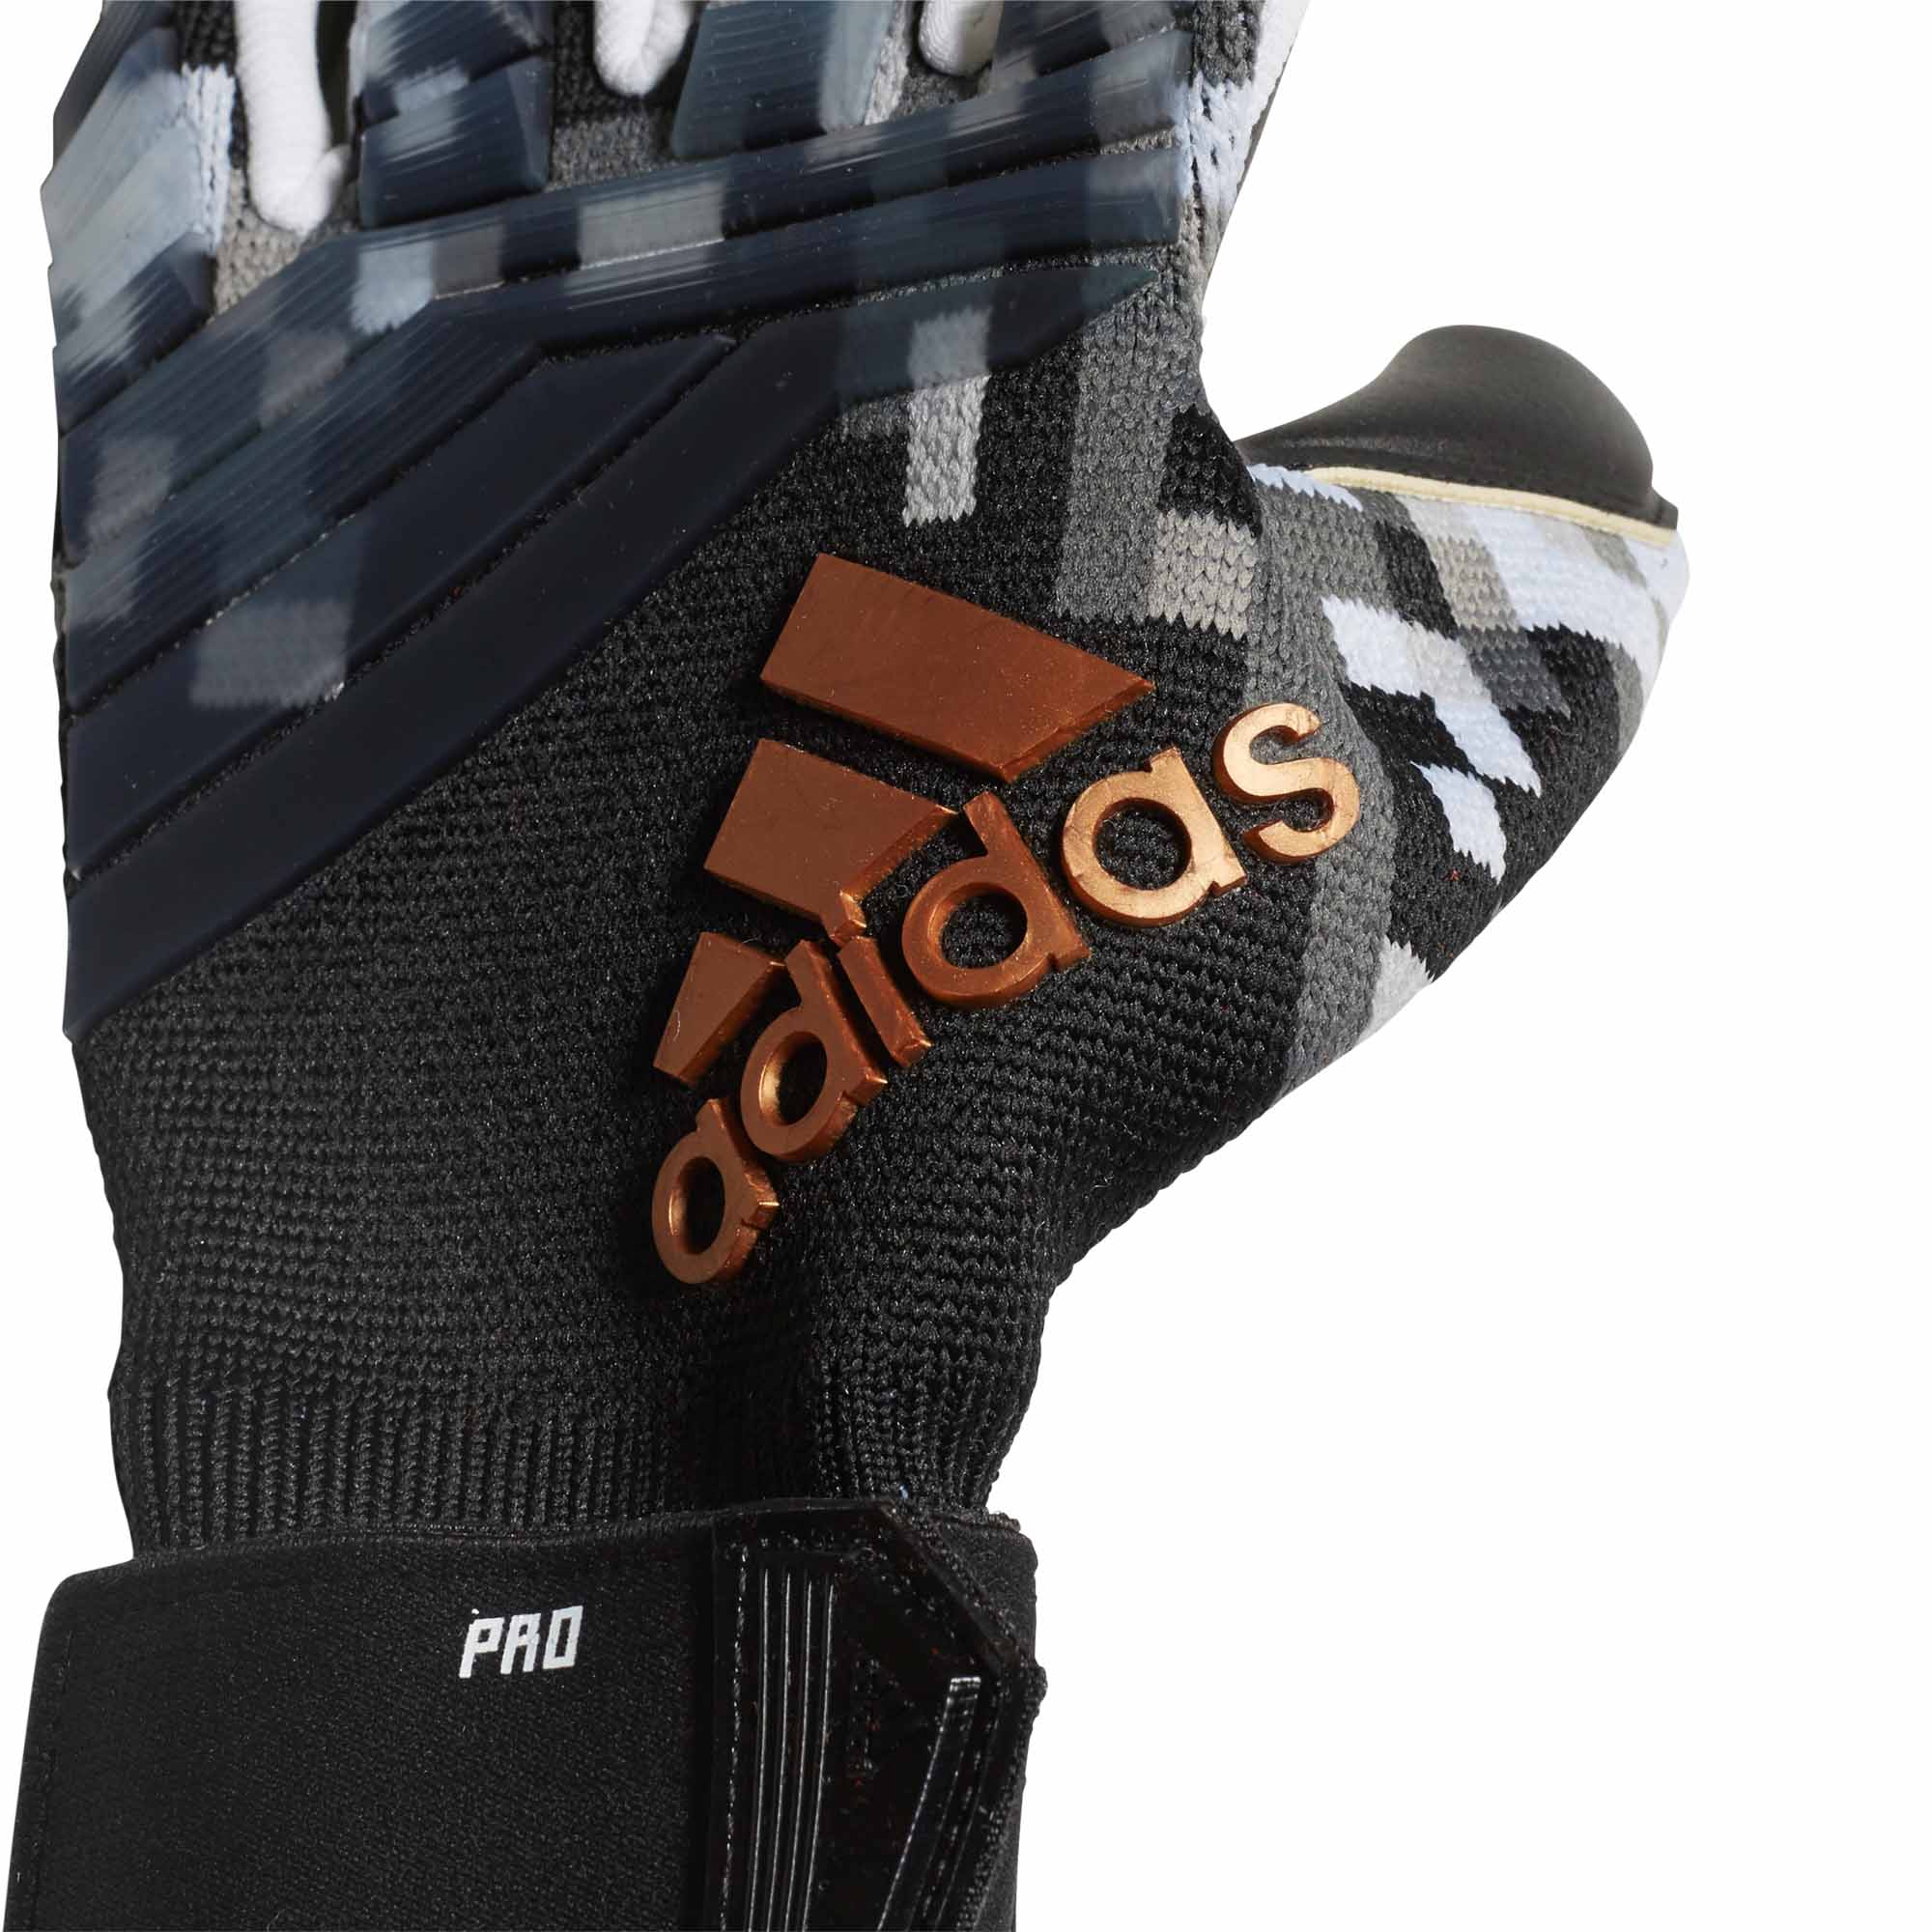 adidas world cup goalkeeper gloves